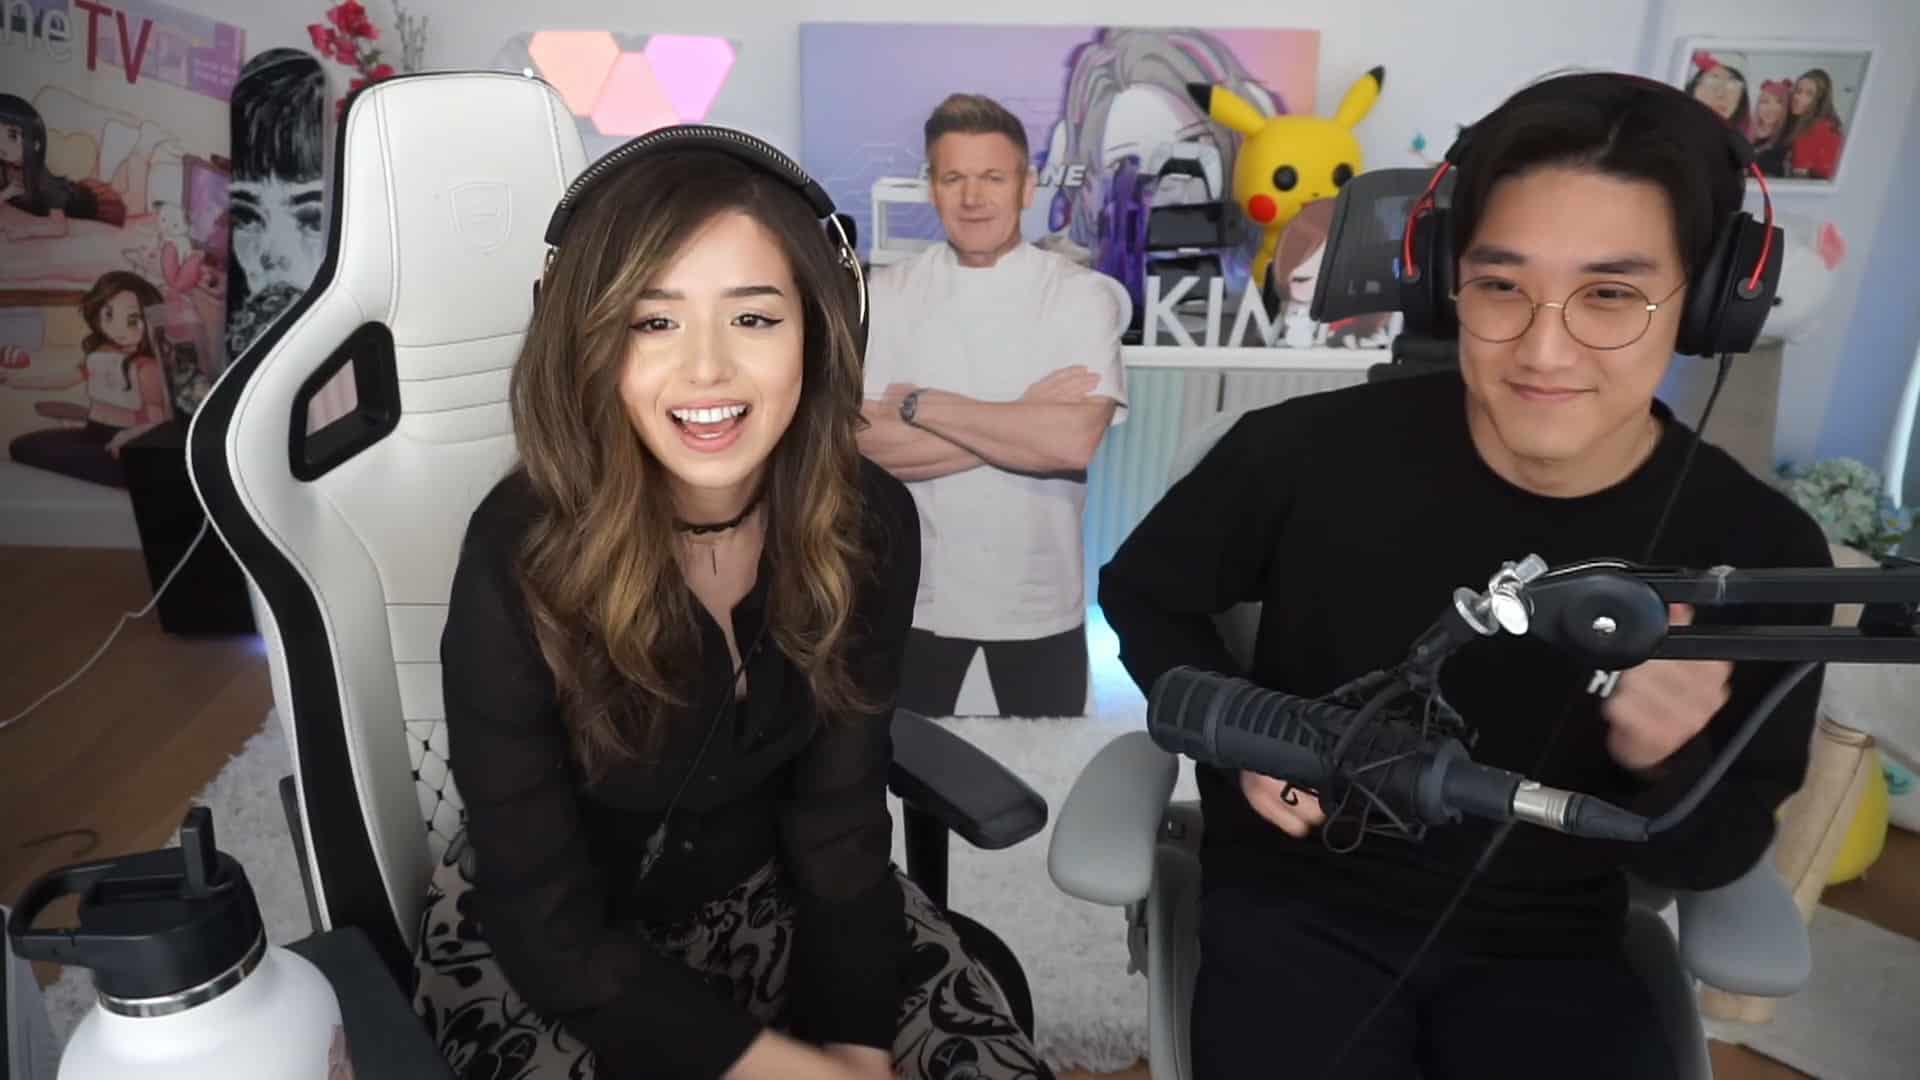 Pokimane with her rumored boyfriend, Kevin Kim, during a Twitch live stream